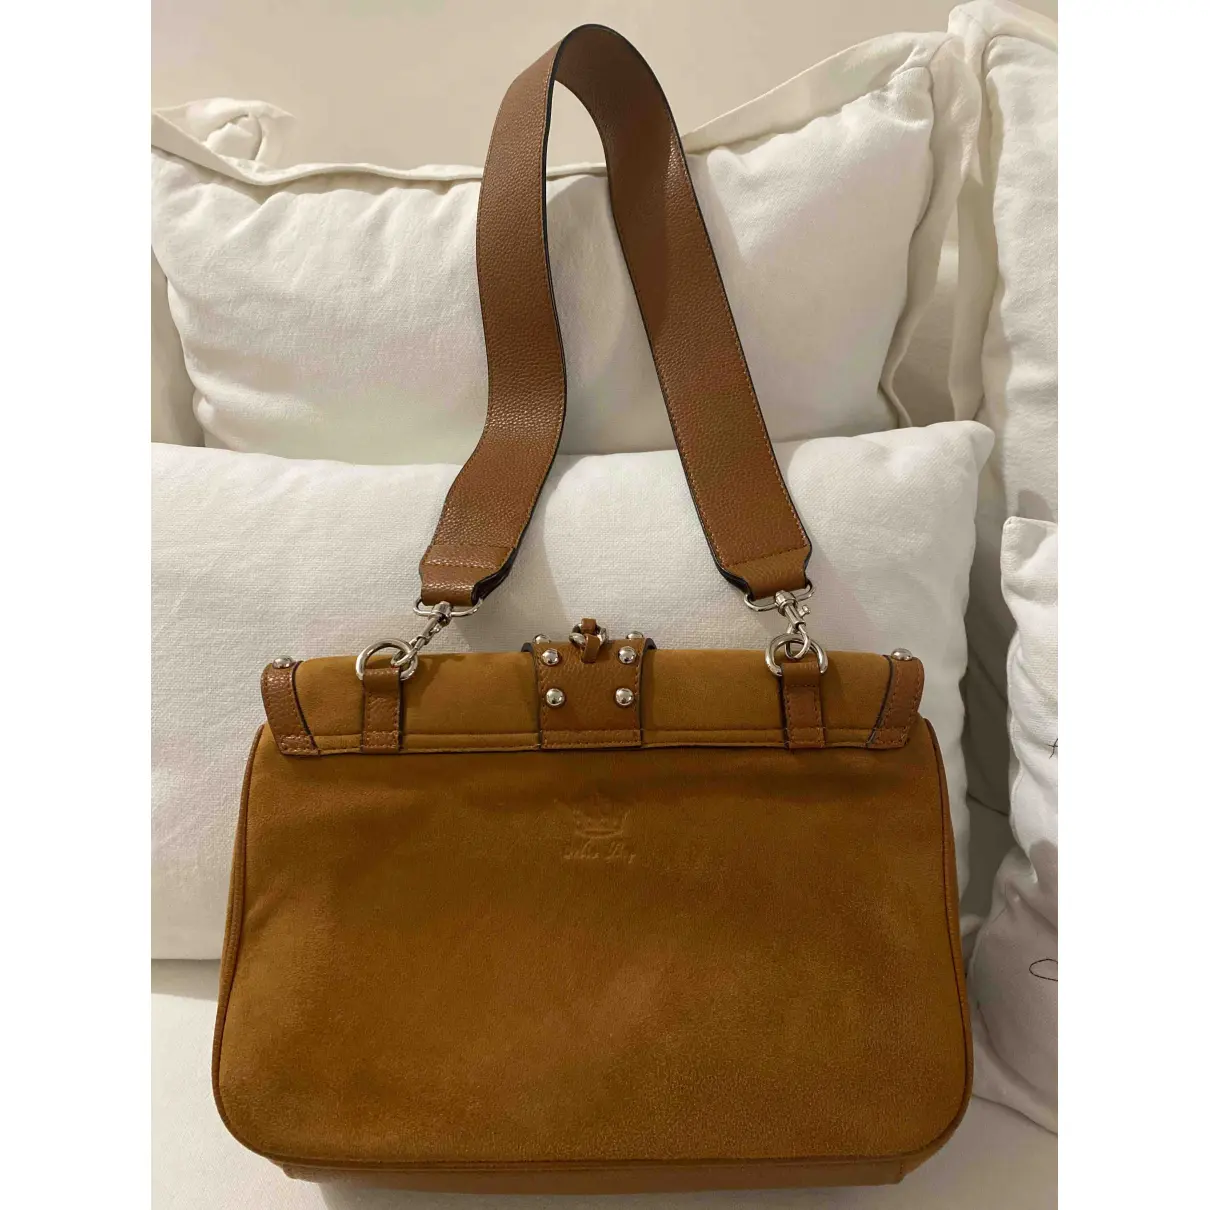 Buy Mia Bag Handbag online